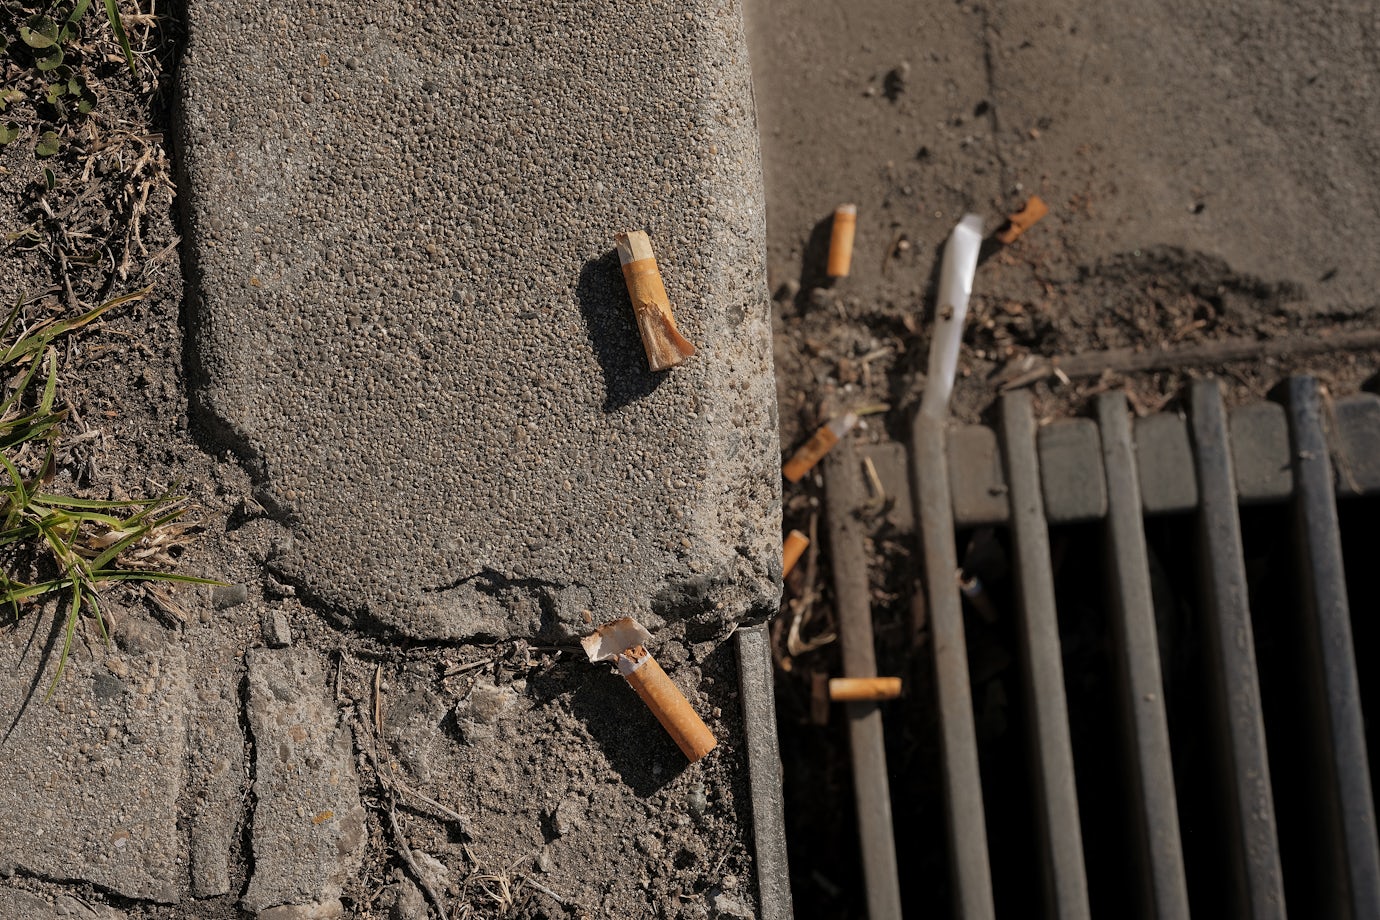 Cigarette butts on a sidewalk